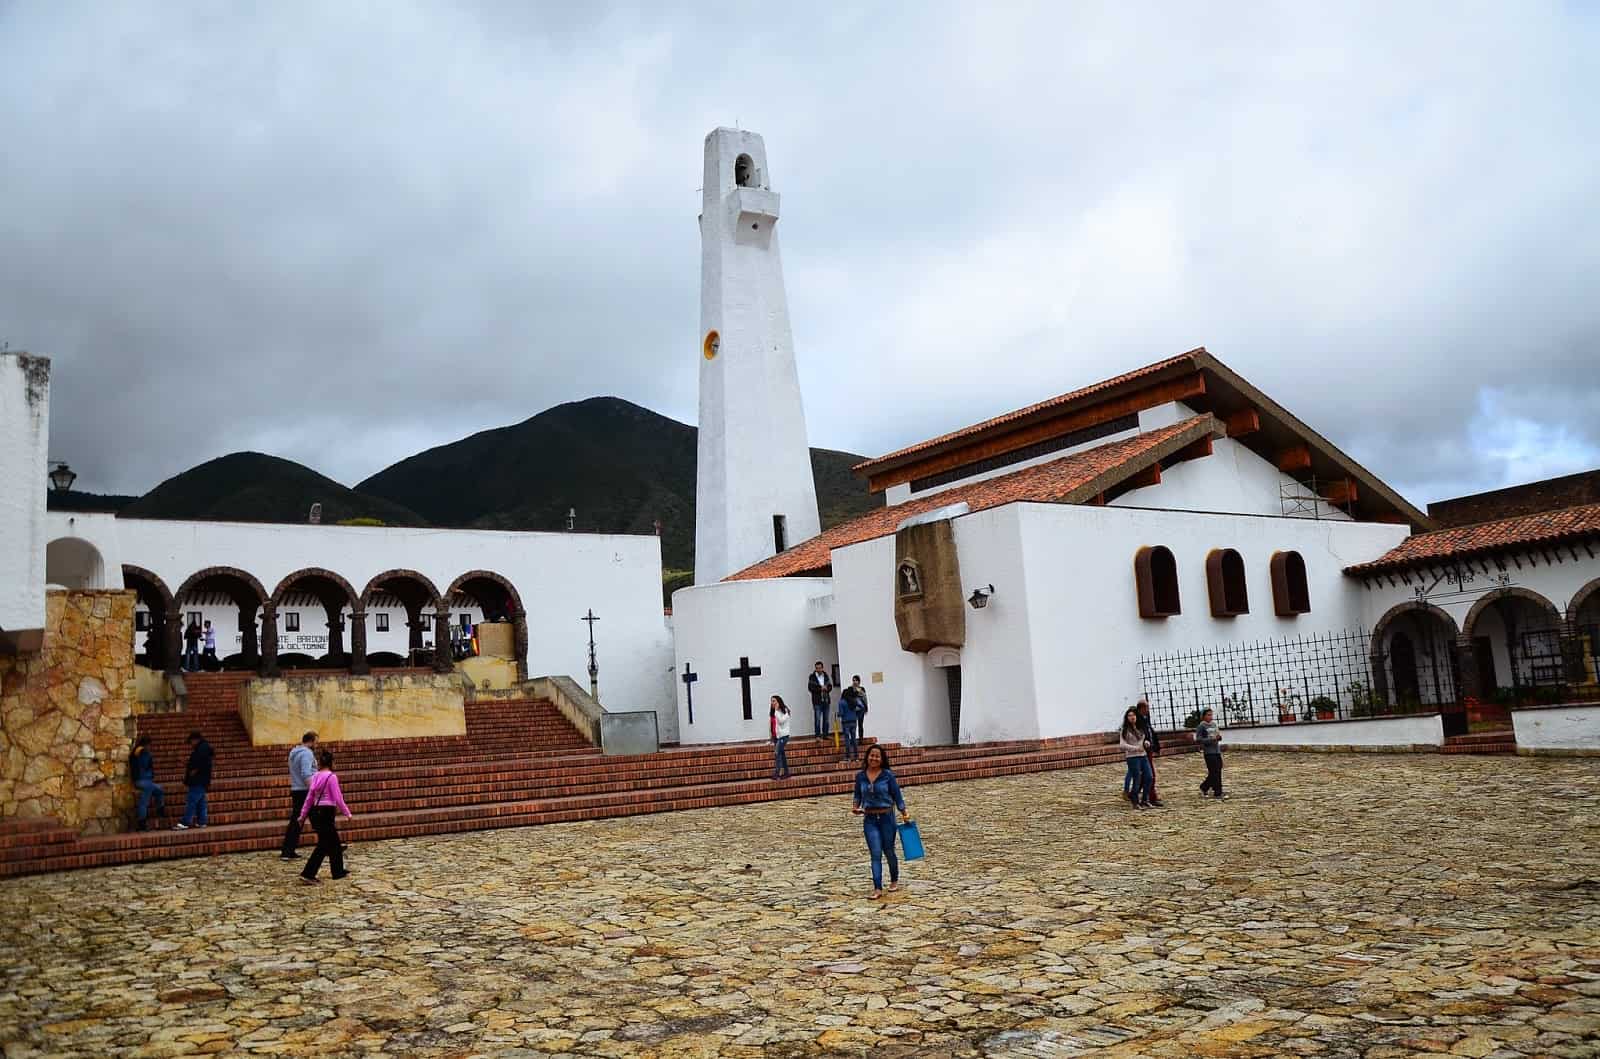 Plaza and church in Guatavita, Cundinamarca, Colombia